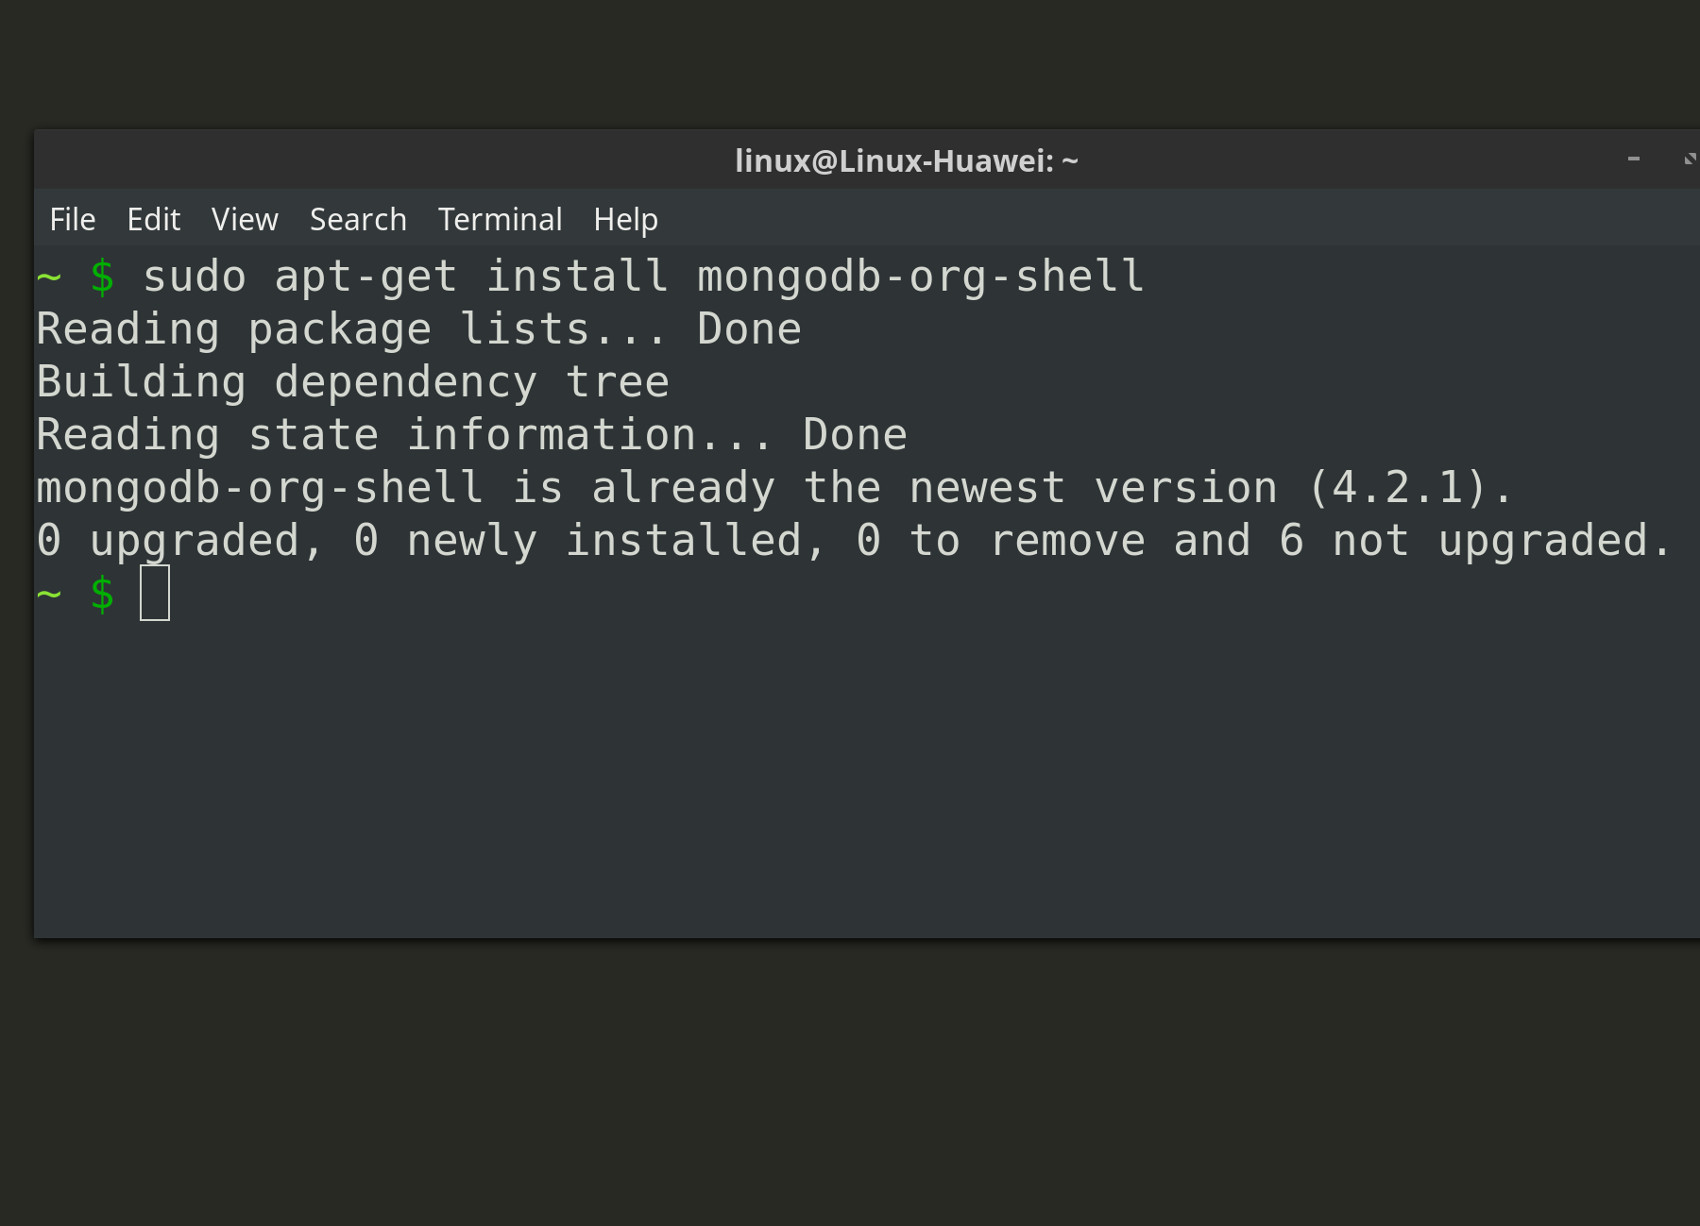 Screenshot of Ubuntu APT-GET repository installing mongodb-org-shell